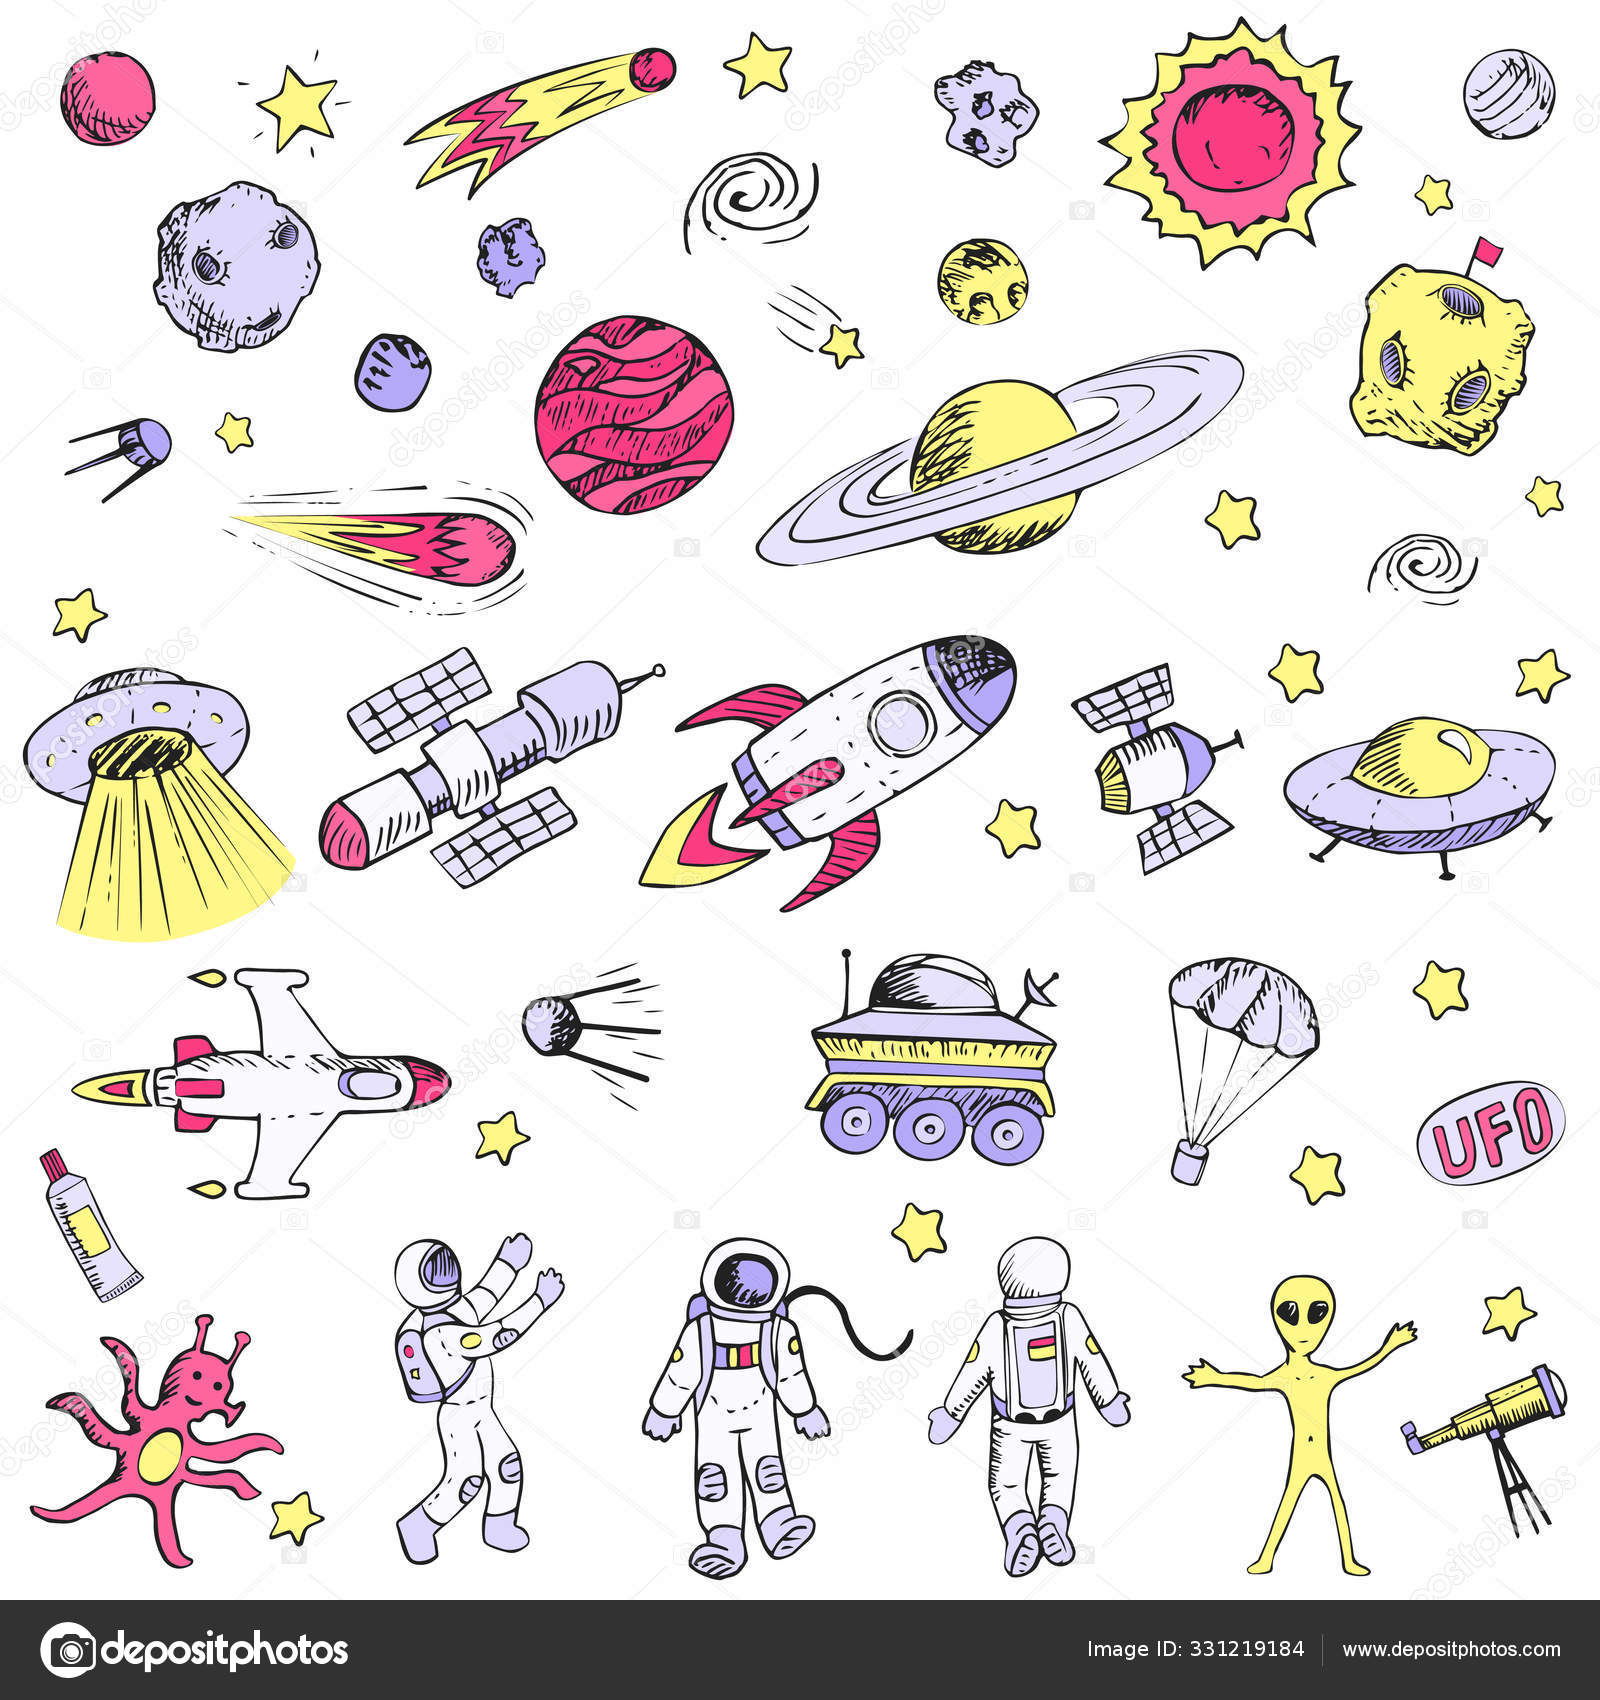 https://st3.depositphotos.com/14378612/33121/v/1600/depositphotos_331219184-stock-illustration-hand-drawn-space-objects-astronaut.jpg